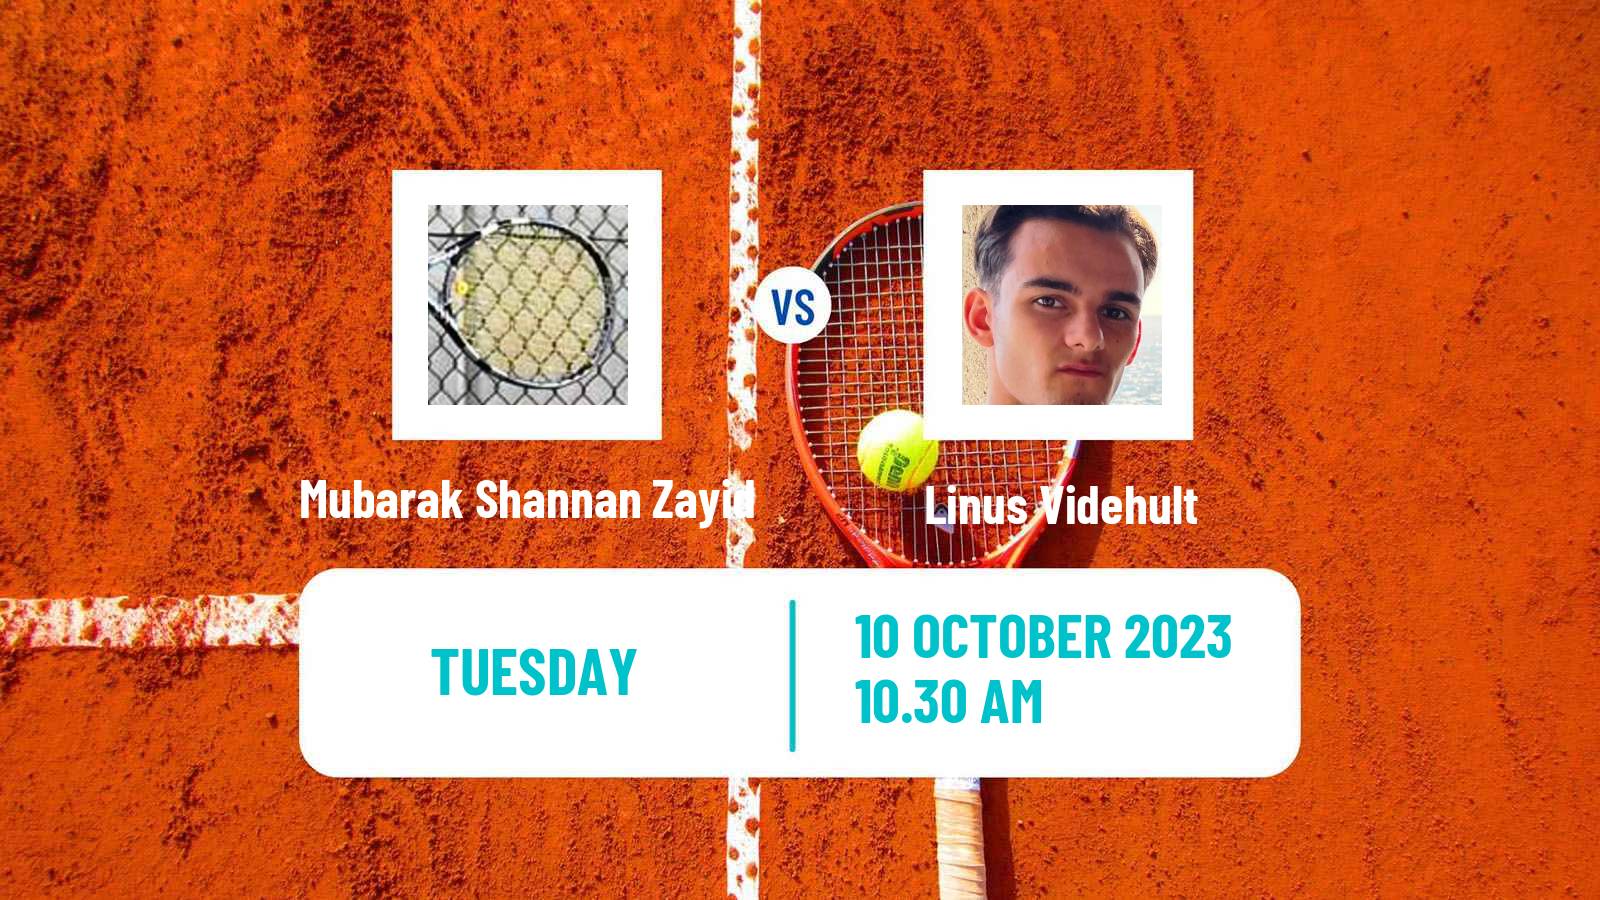 Tennis ITF M15 Doha 3 Men Mubarak Shannan Zayid - Linus Videhult